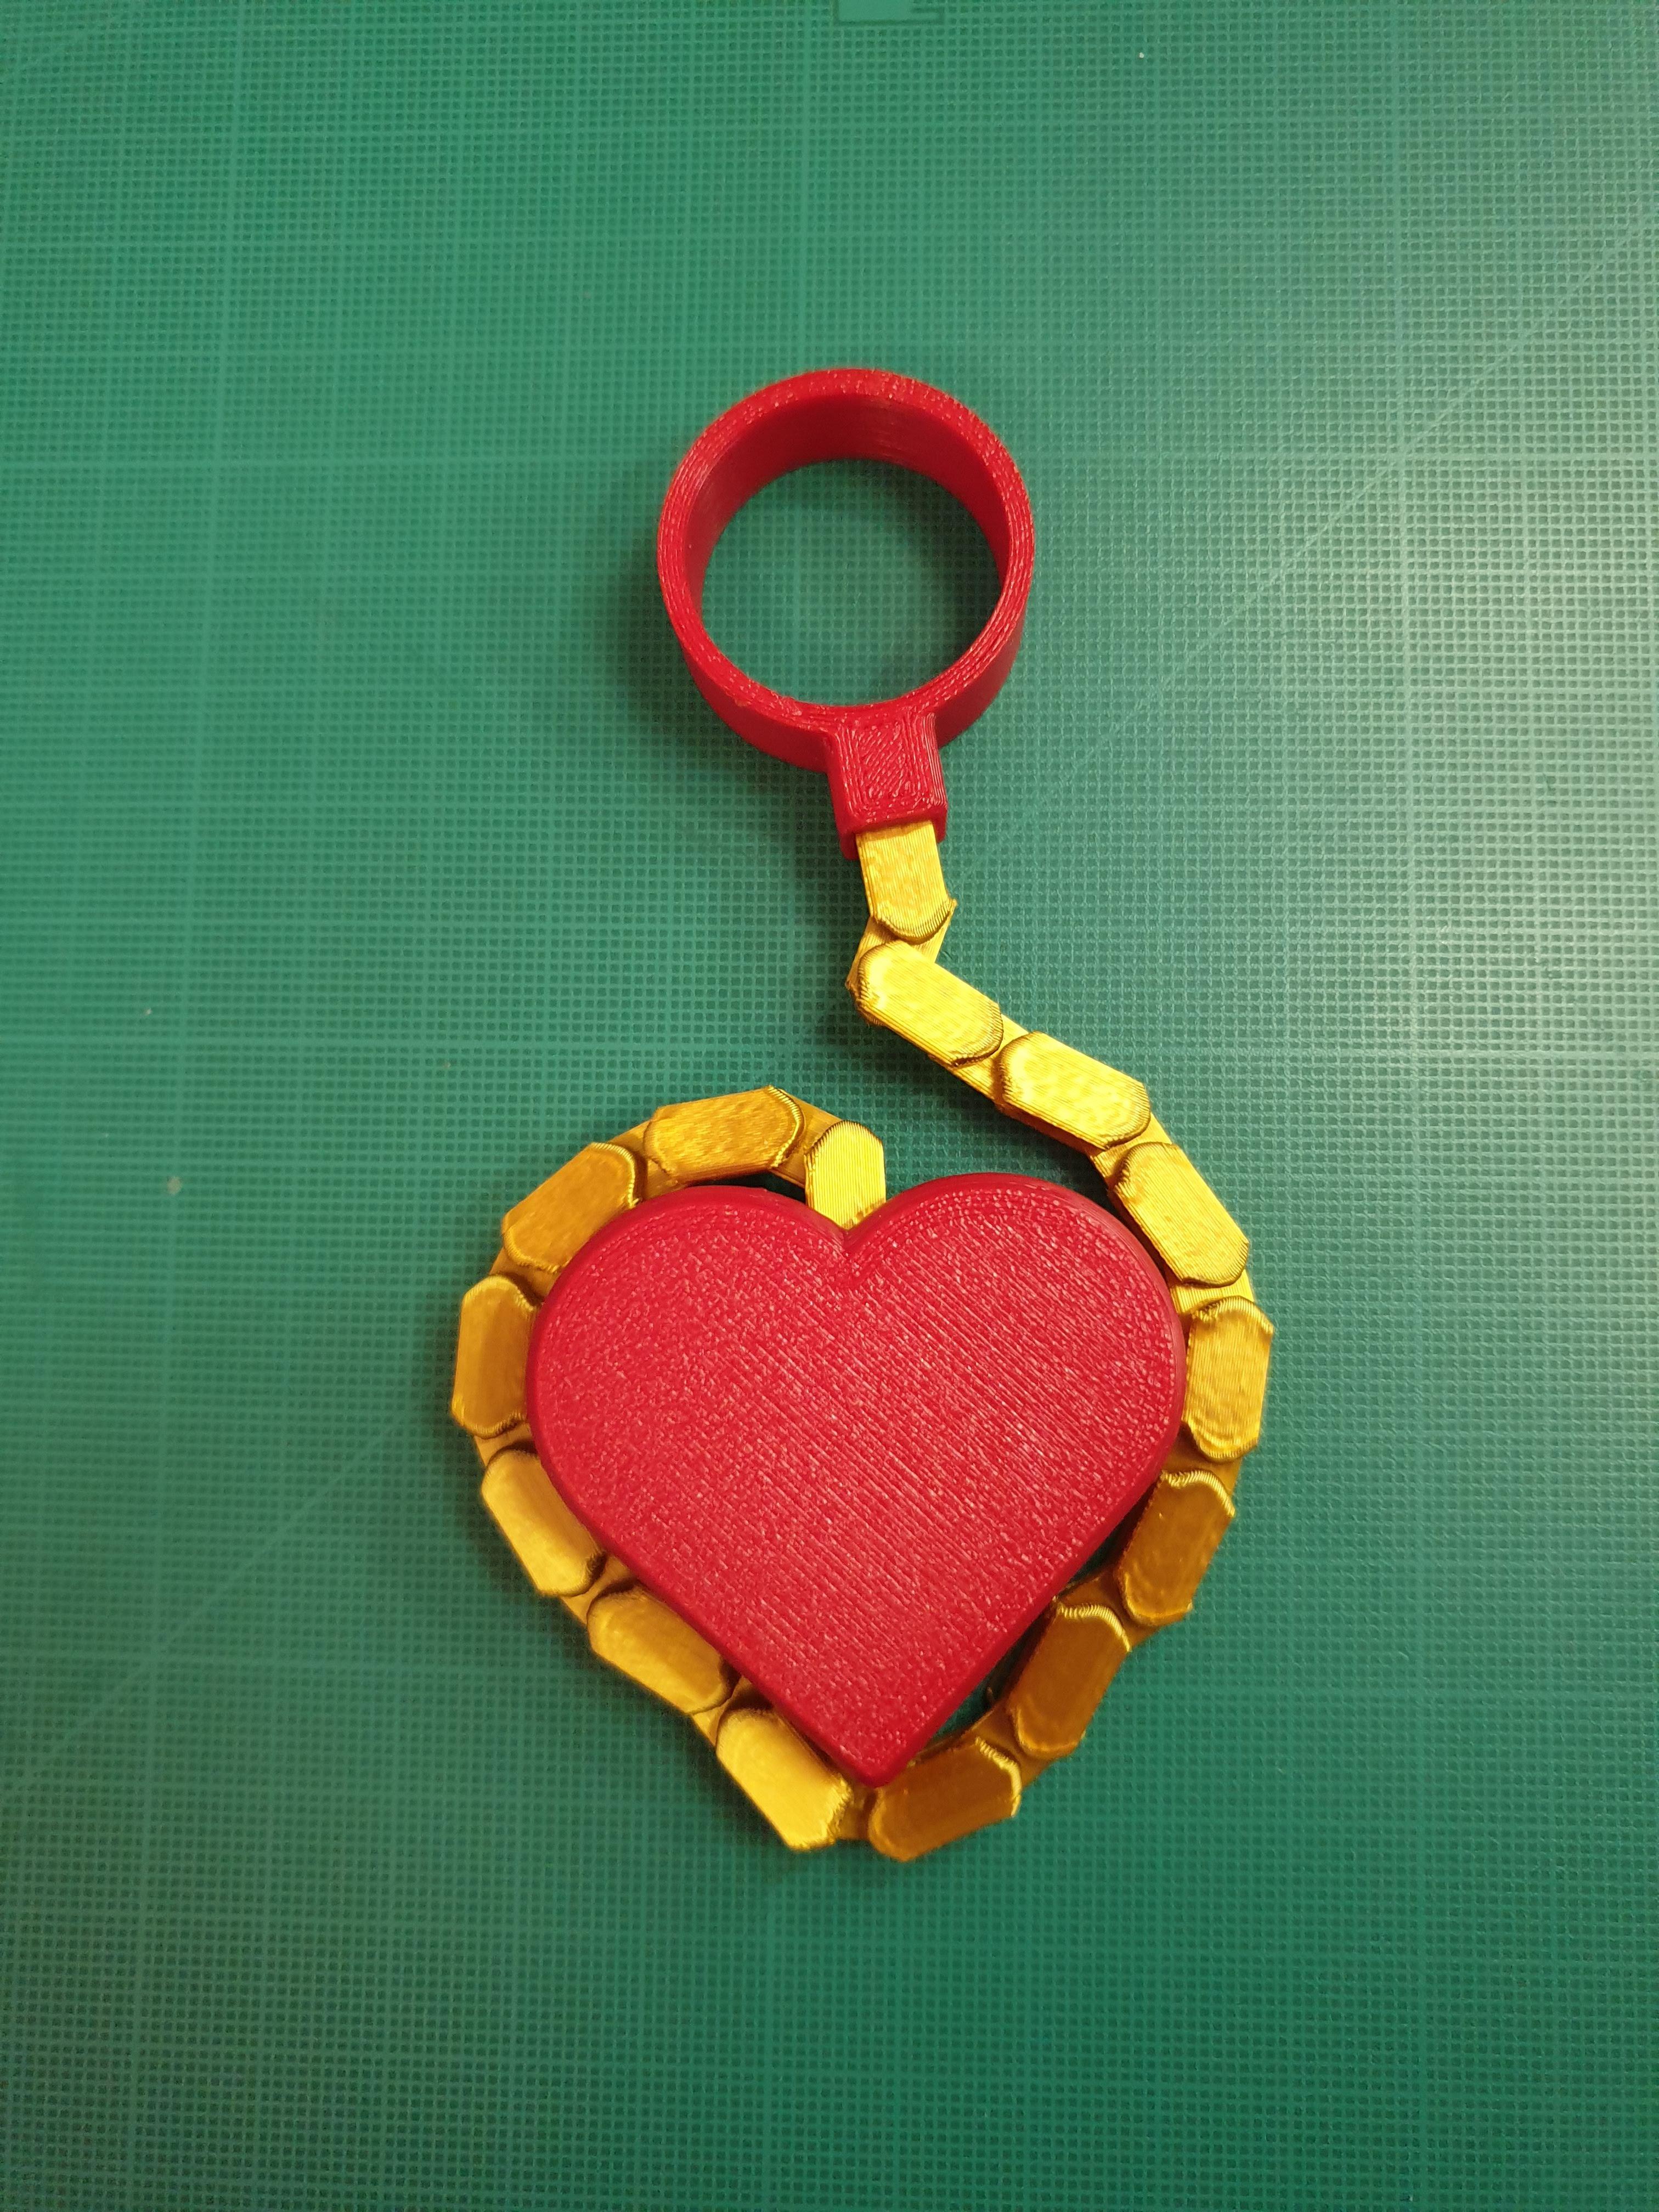 Ringchaku Spinning Fidget Toy - Valentine's Day Edition 3d model